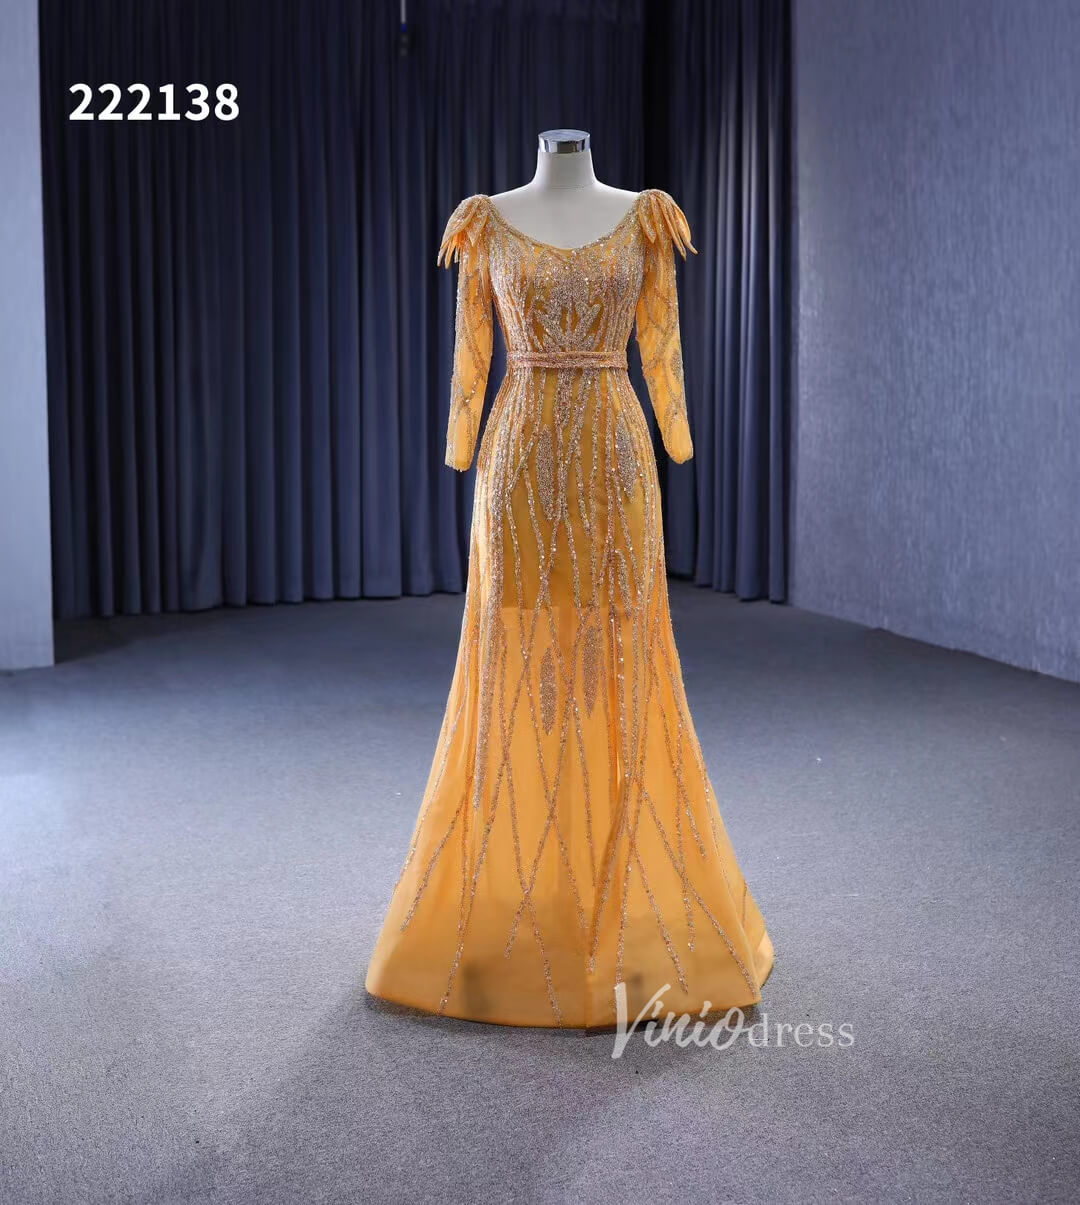 Long Sleeve Gold Wedding Dresses Removable Overskirt Pageant Dress 222138-prom dresses-Viniodress-Viniodress